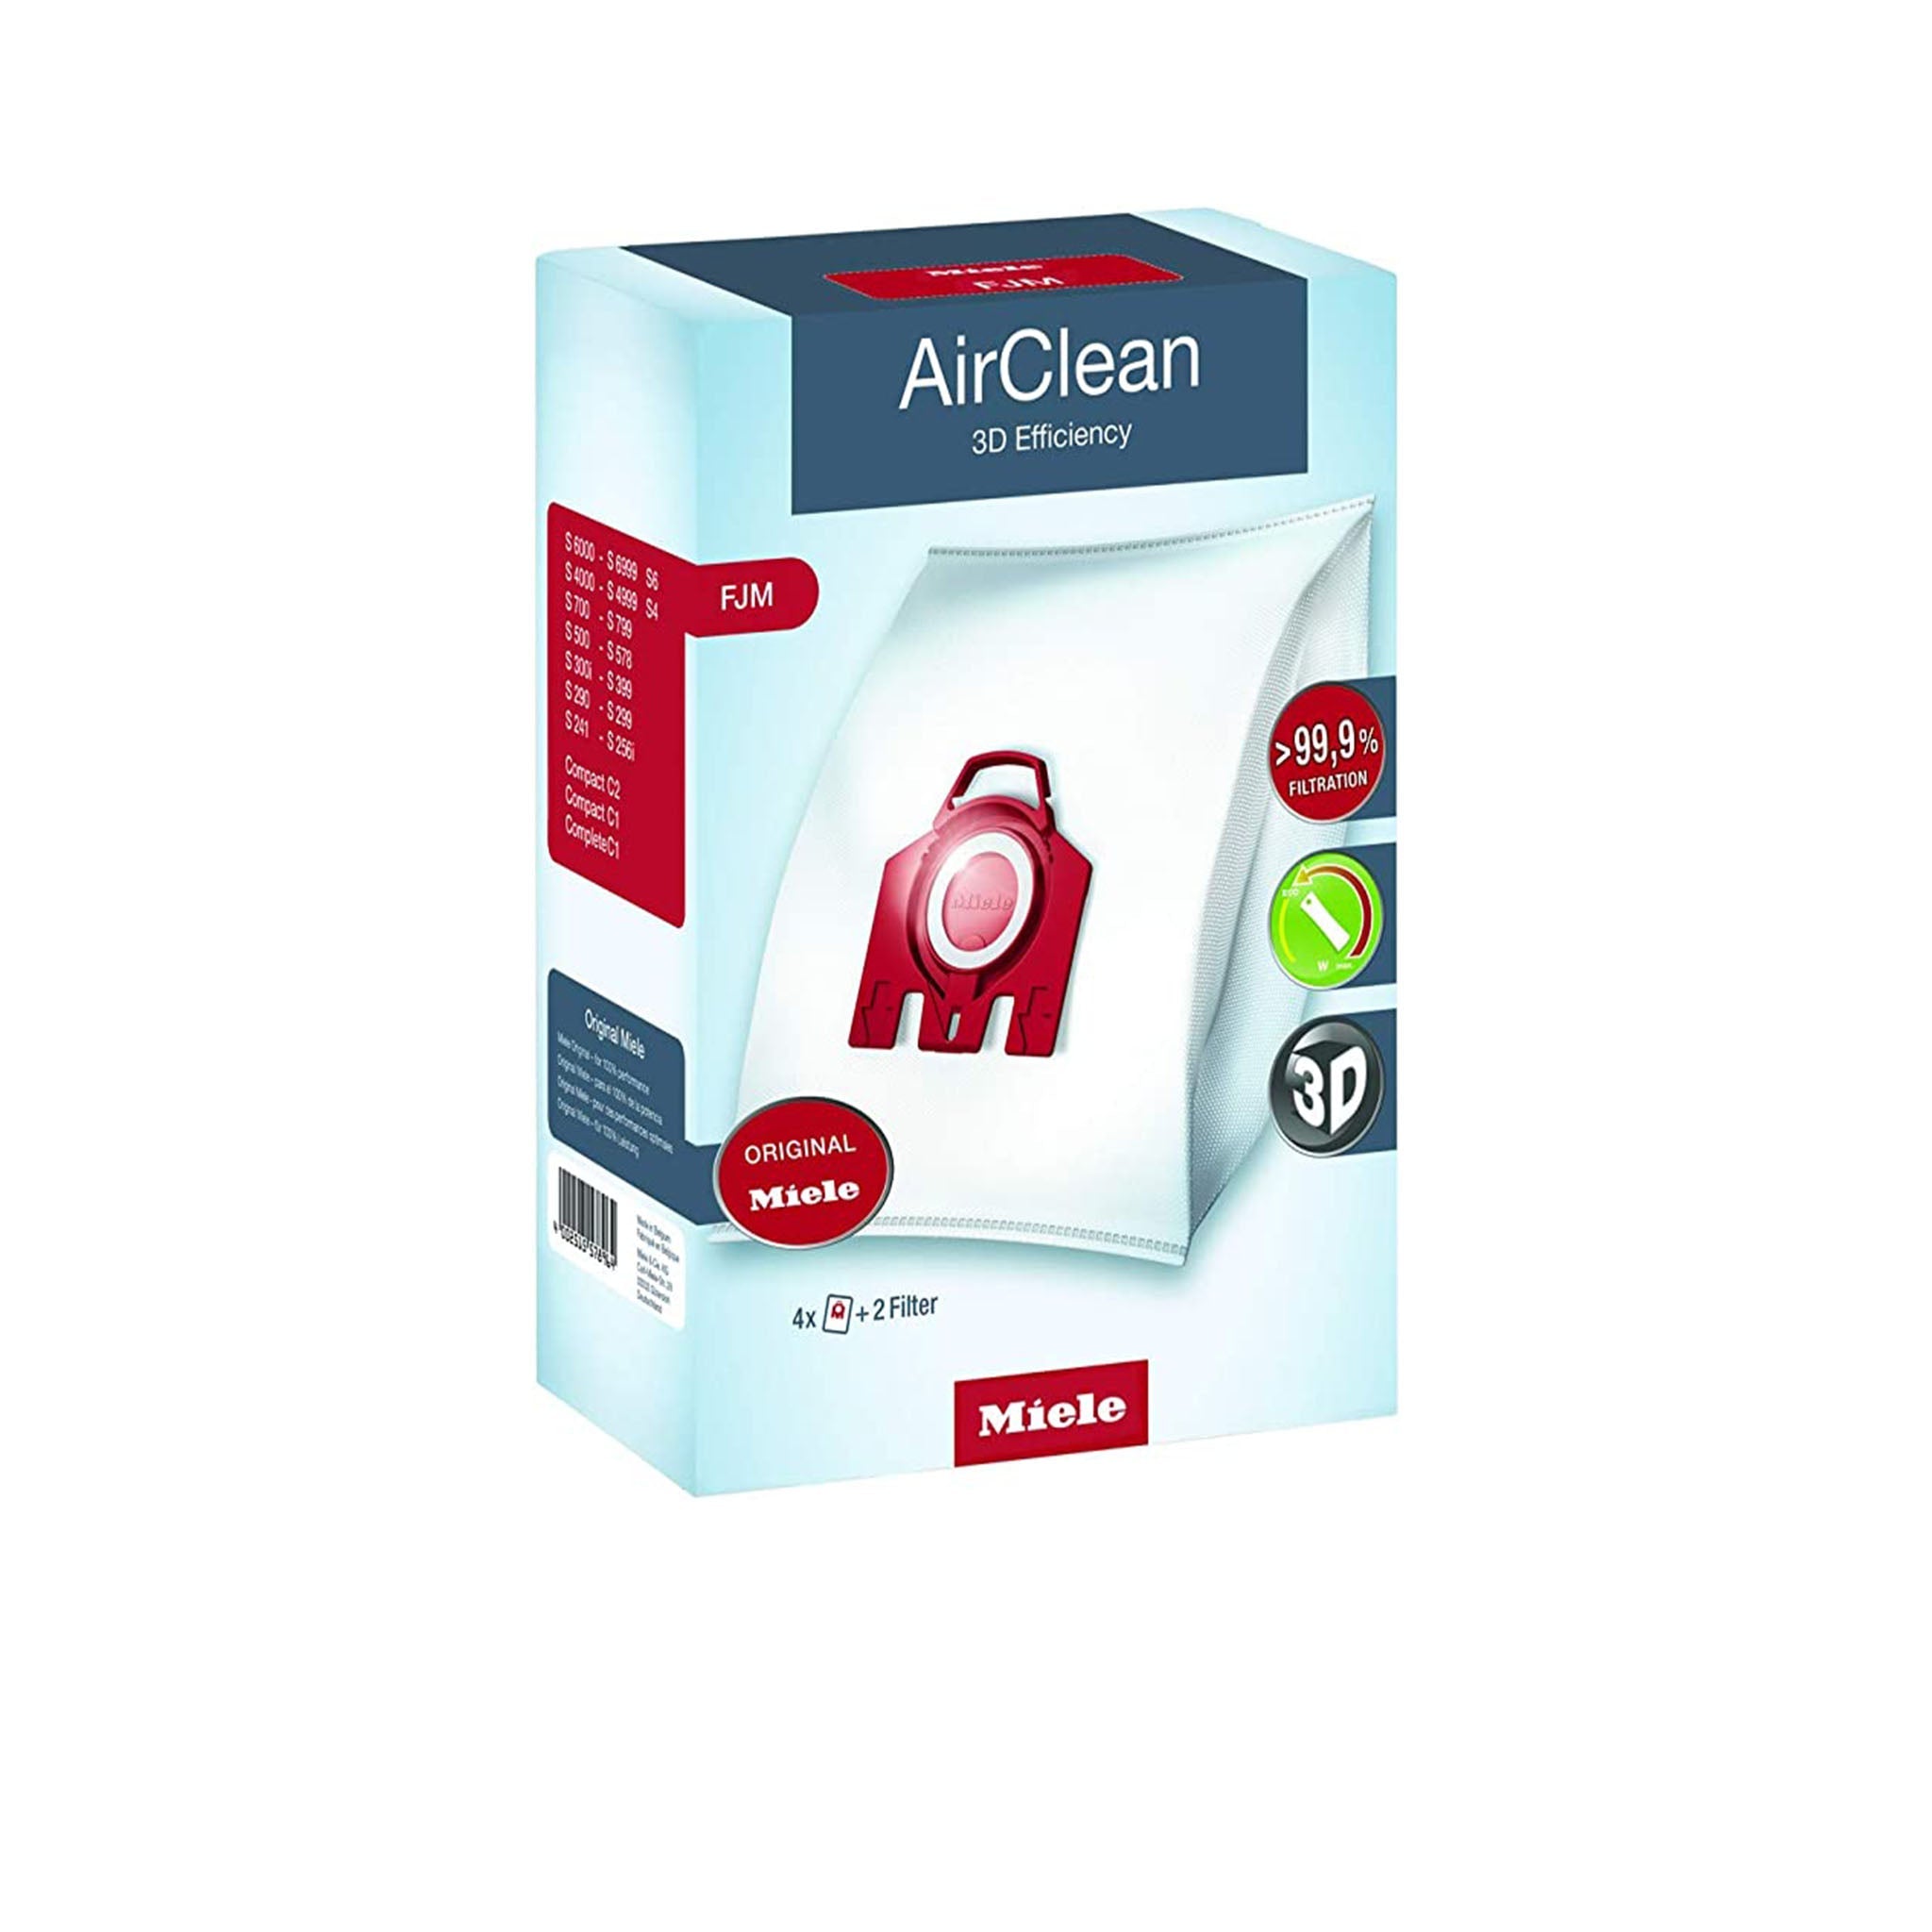 Miele AirClean 3D Efficiency Vacuum FilterBags (Type FJM)